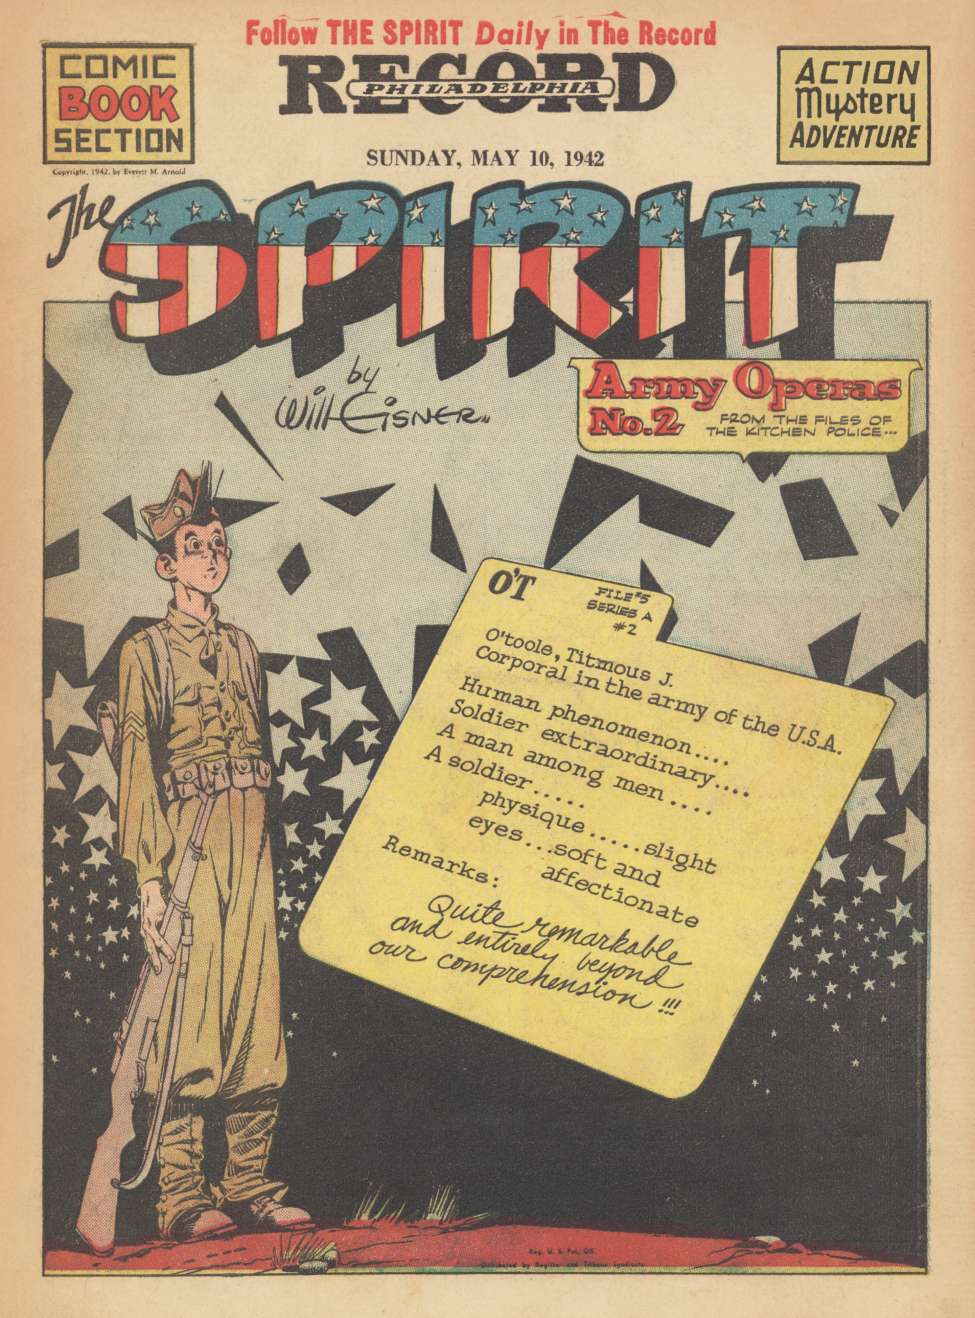 Comic Book Cover For The Spirit (1942-05-10) - Philadelphia Record - Version 2